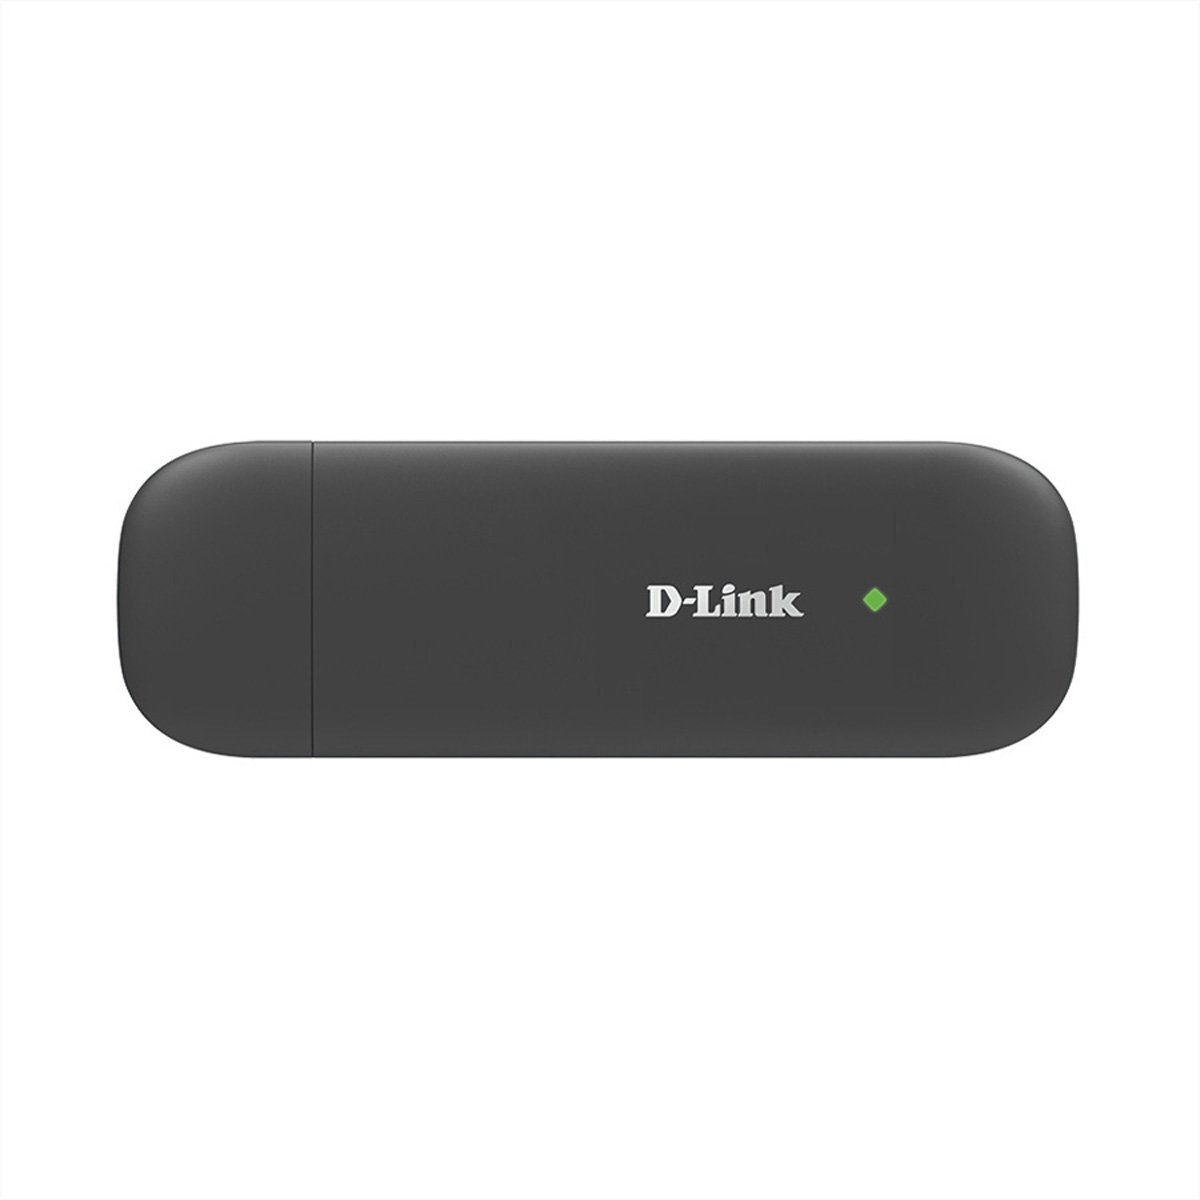 D-Link »DWM-222 4G LTE USB Adapter 150MBit LTE USB Stick, LTE Cat.4«  WLAN-Repeater